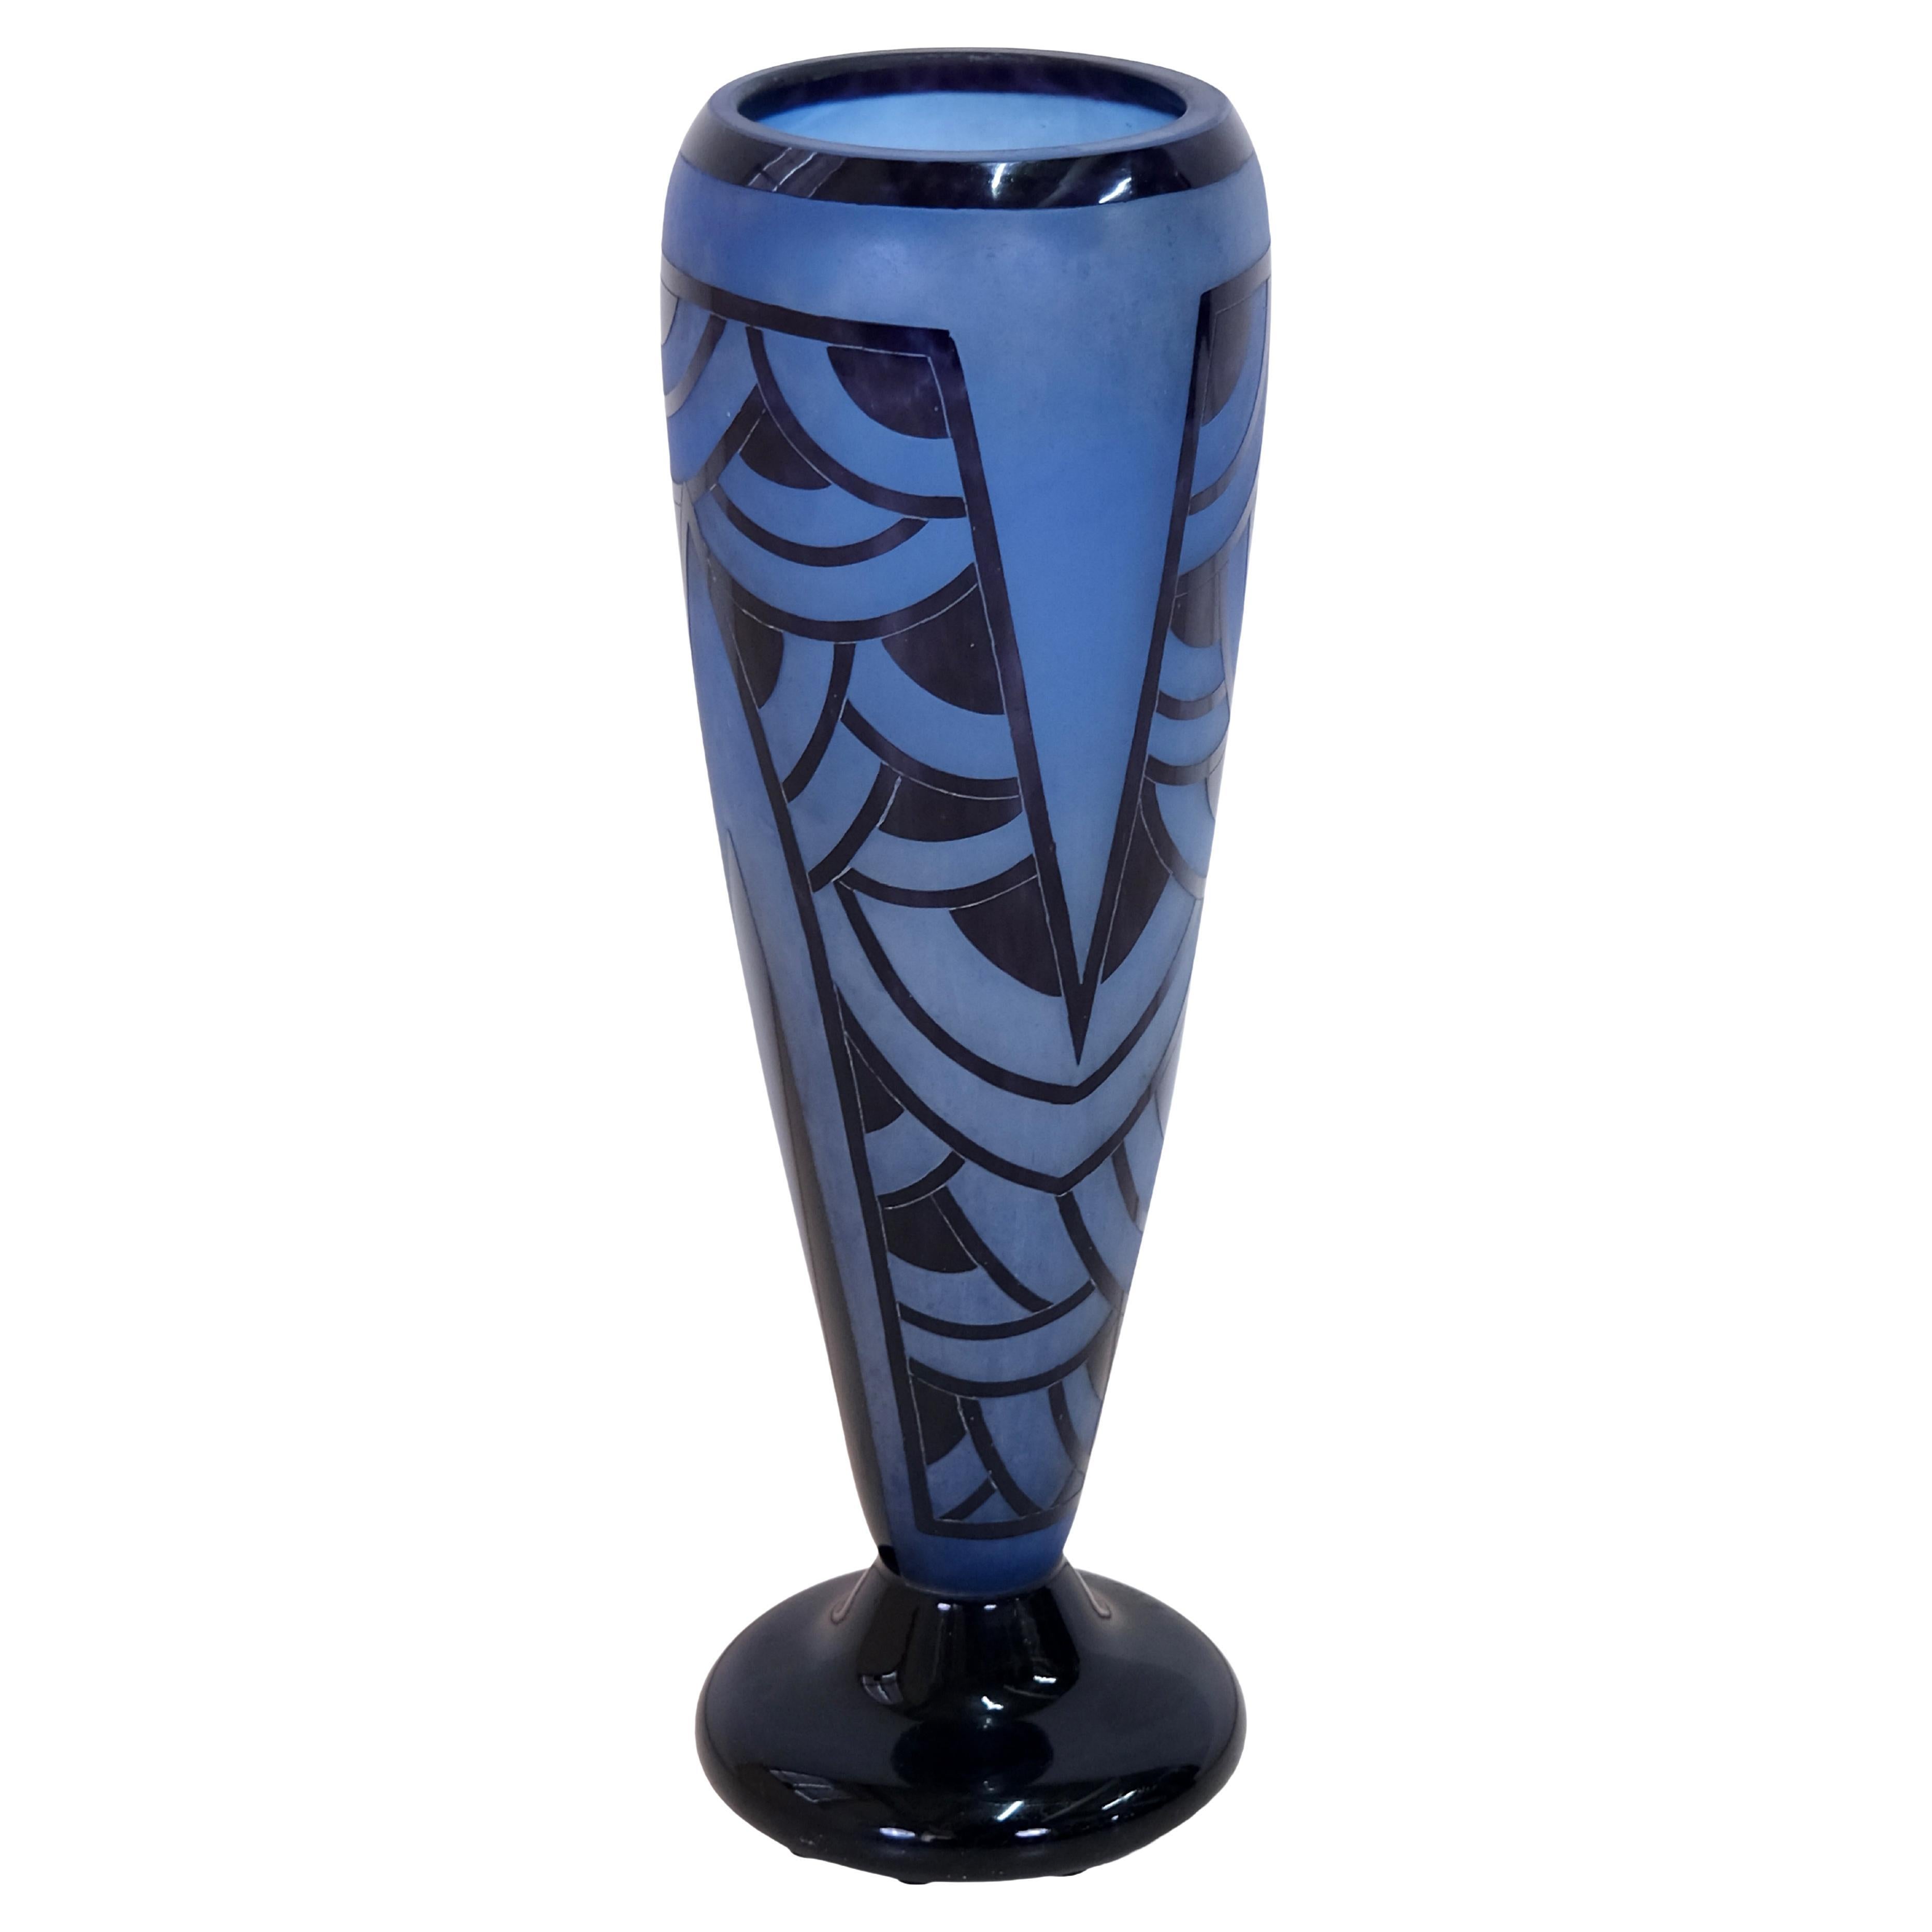 Nénuphars Big Blue Vase with Art Deco Pattern by Schneider for Le Verre Français